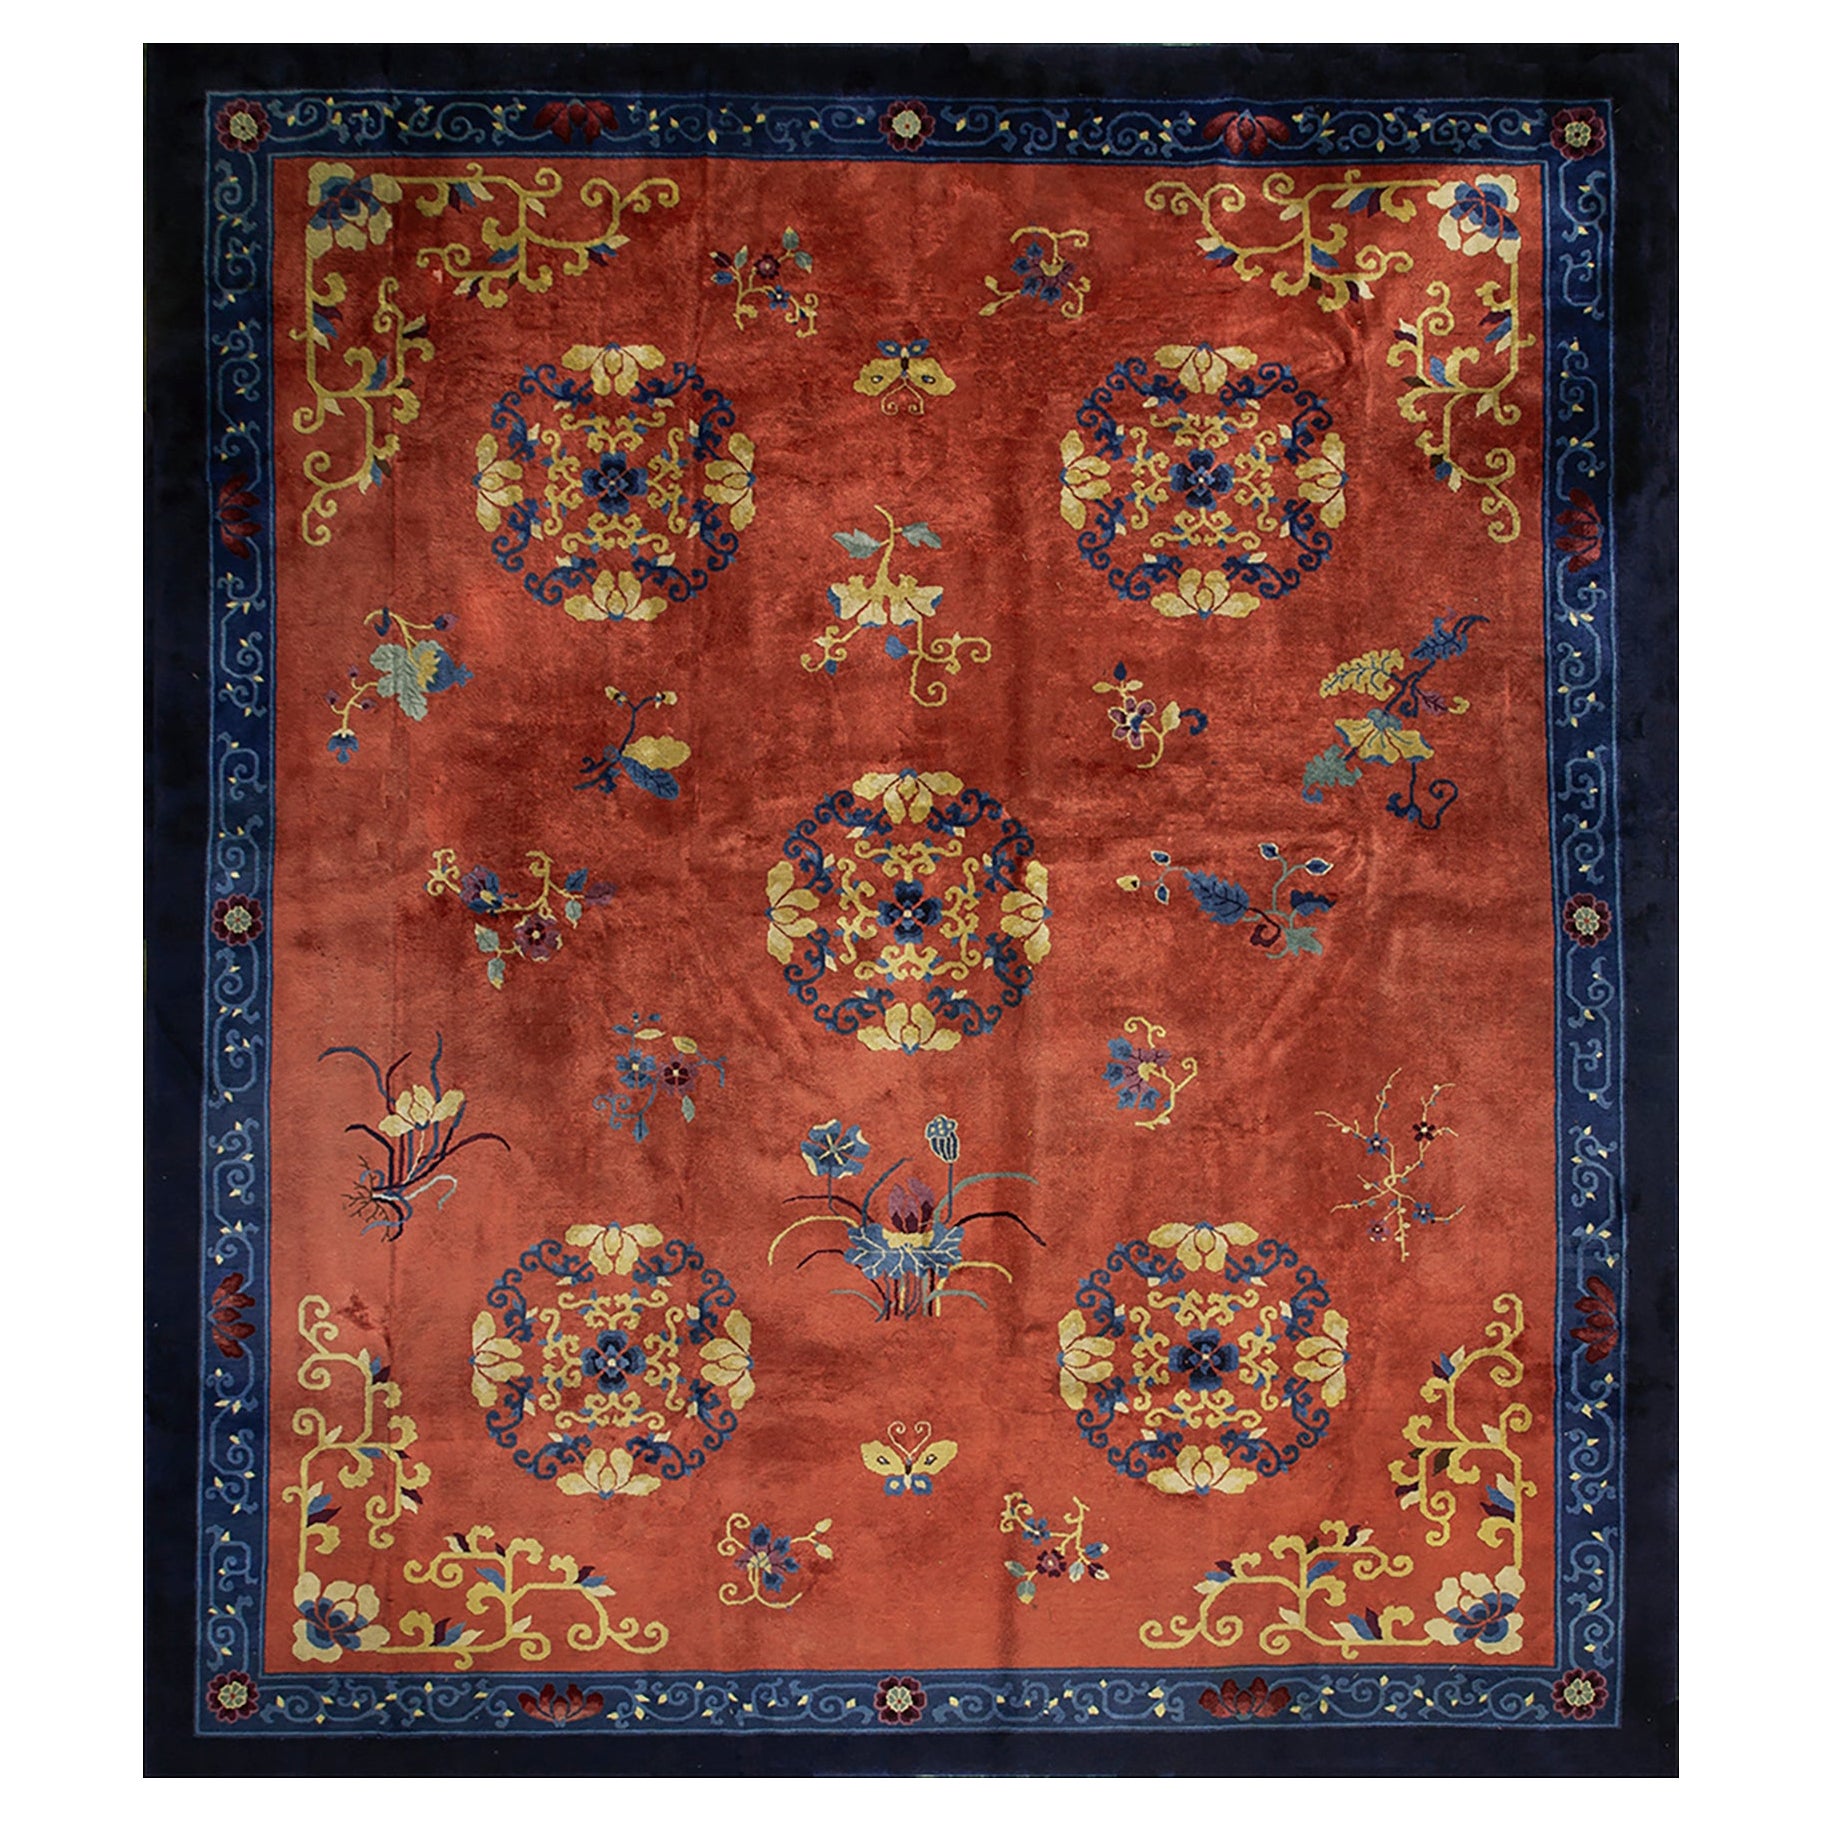 Early 20th Century Chinese Peking Carpet ( 11'9" x 13'3" - 358 x 404 )